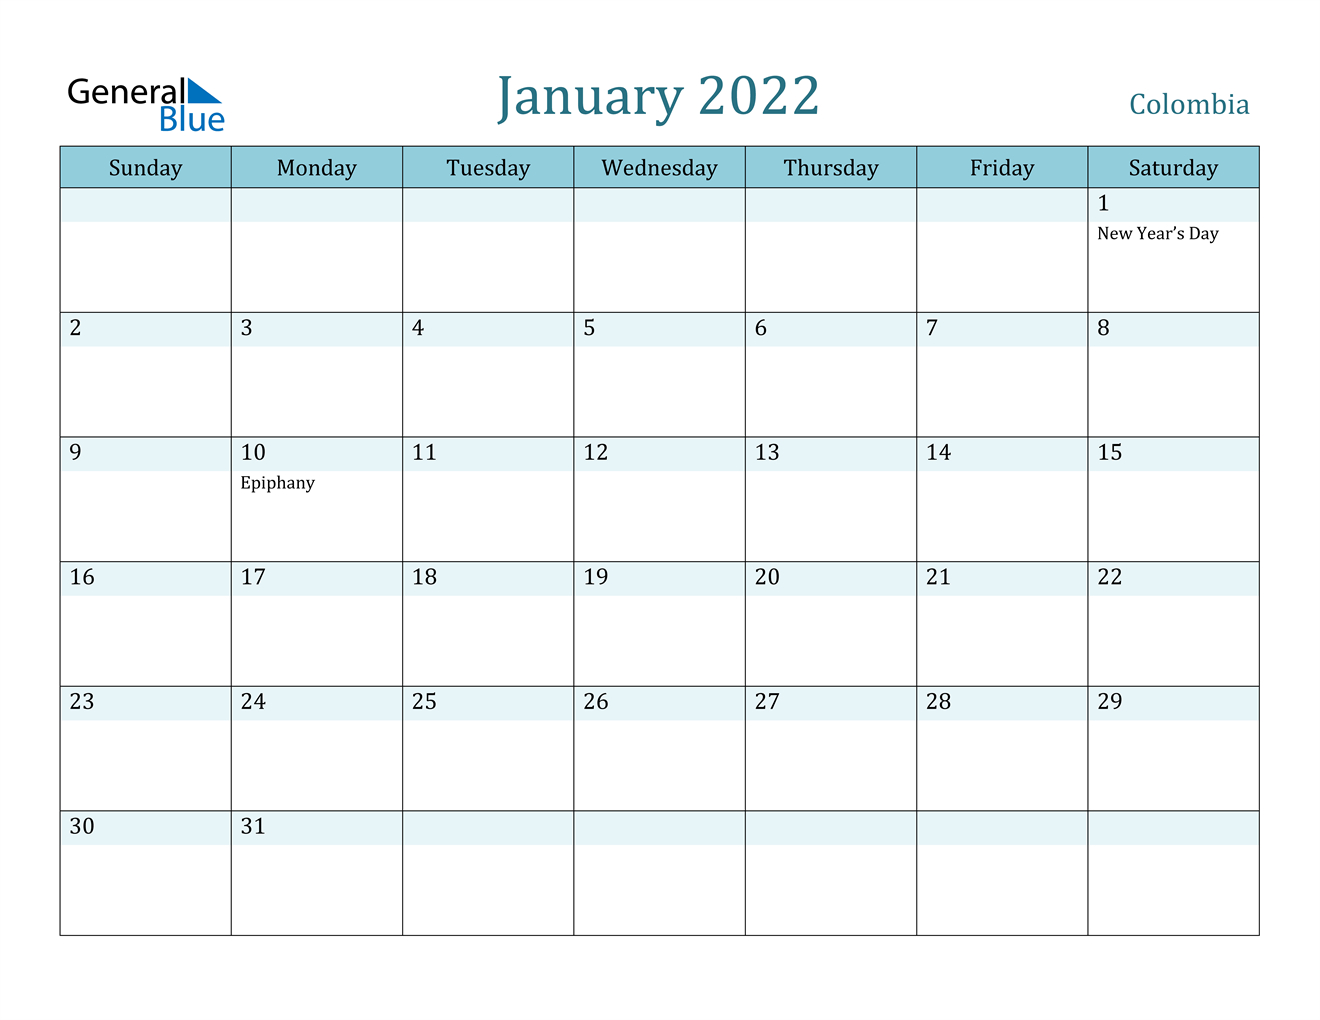 January 2022 Calendar - Colombia